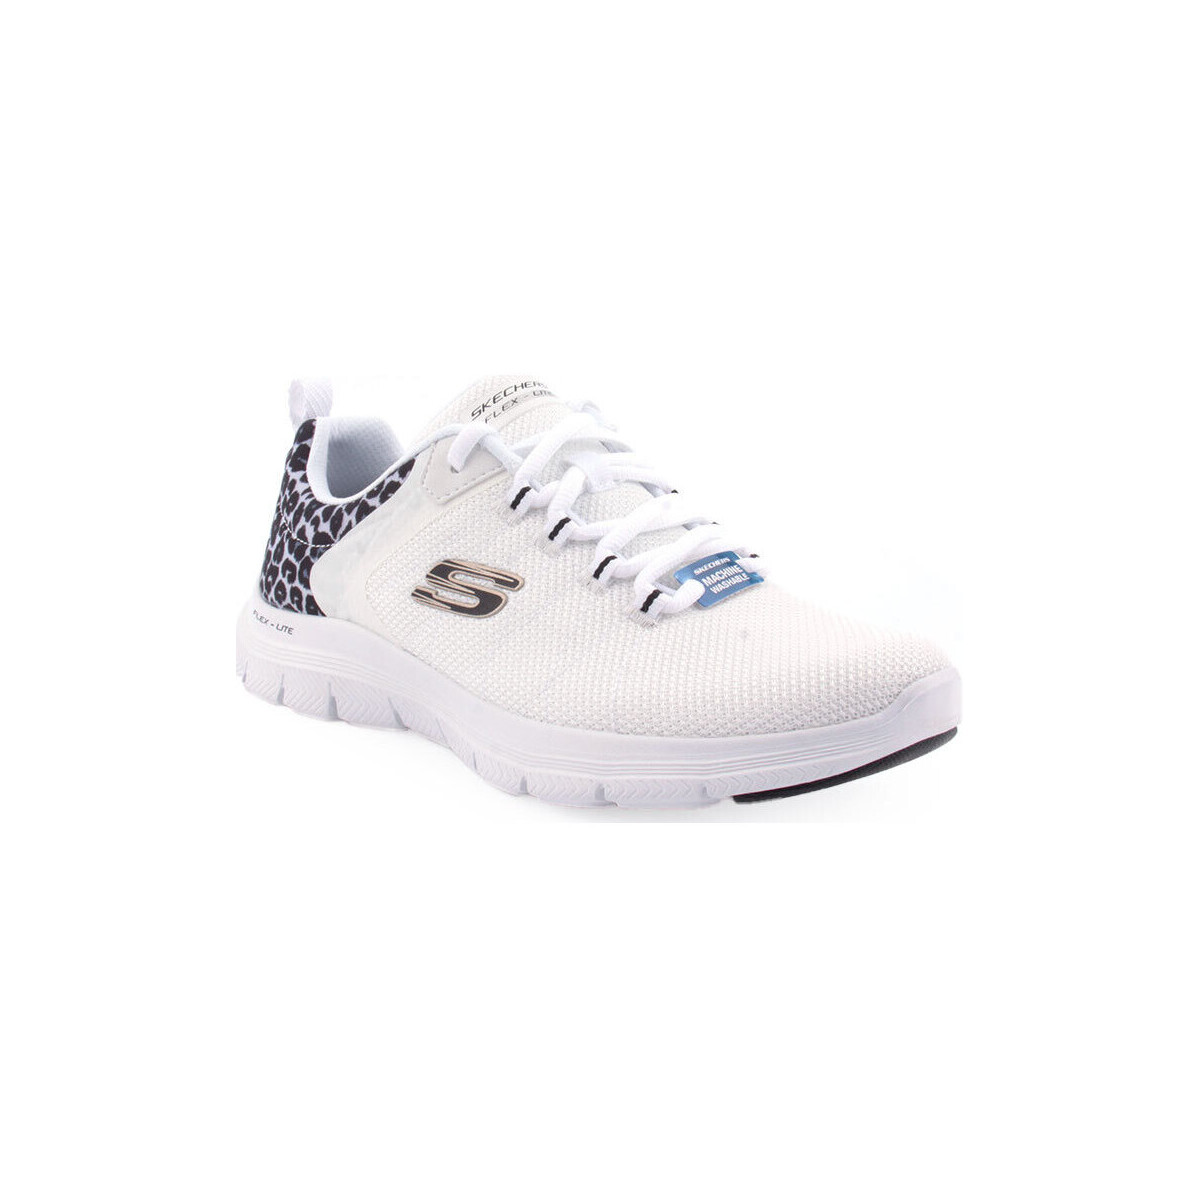 Zapatos Mujer Tenis Skechers T Tennis Blanco